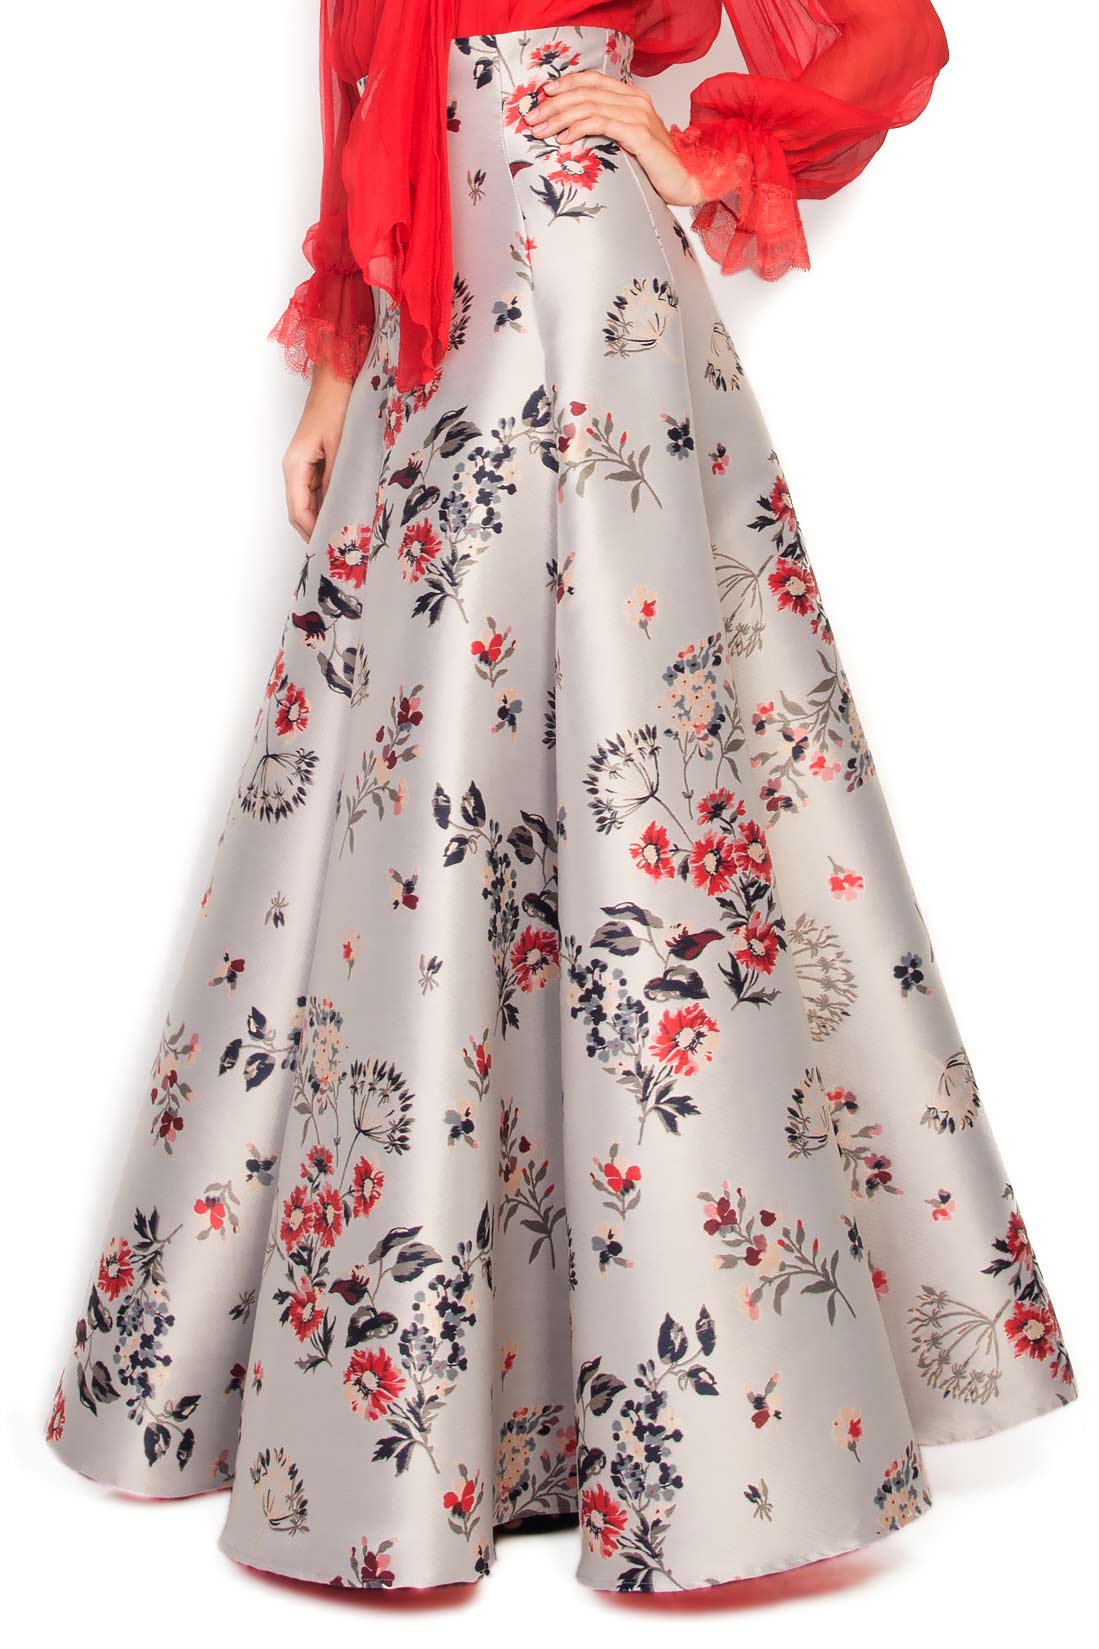 Floral-print jacquard maxi skirt Elena Perseil image 1